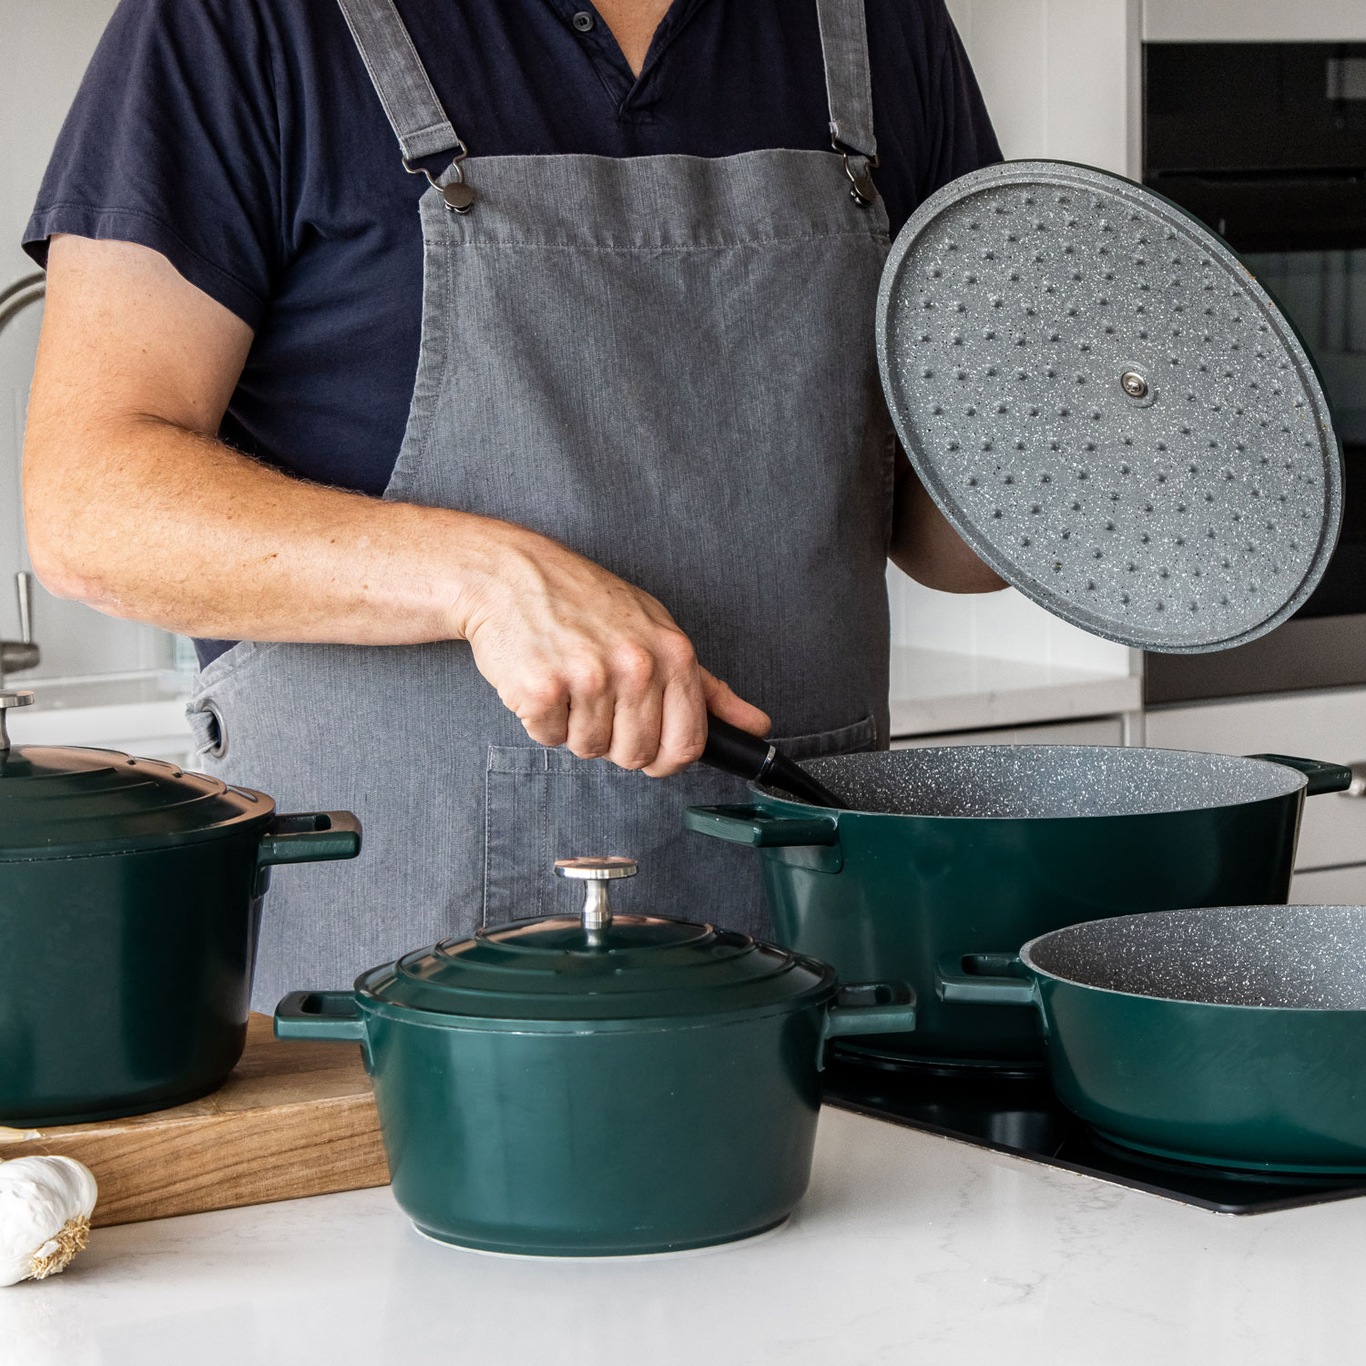 https://royaldesign.com/image/2/kitchen-craft-masterclass-casserole-hunter-green-3?w=800&quality=80